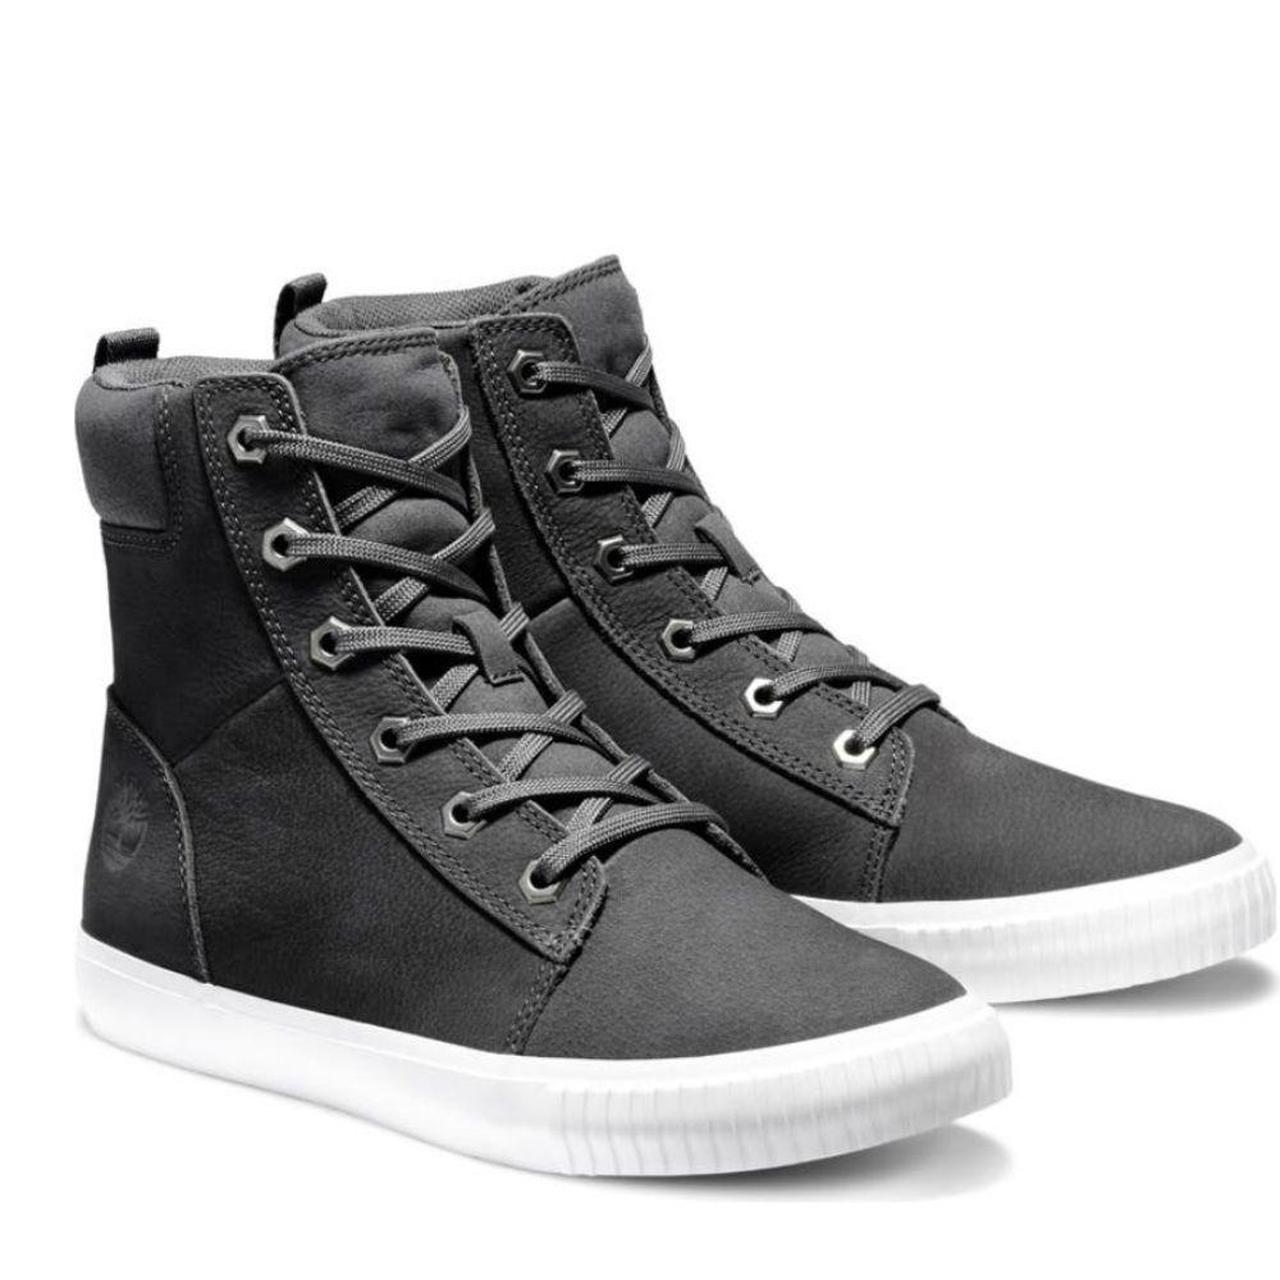 Product Image 1 - TIMBERLAND Skyla Bay Sneaker Boot
Size: